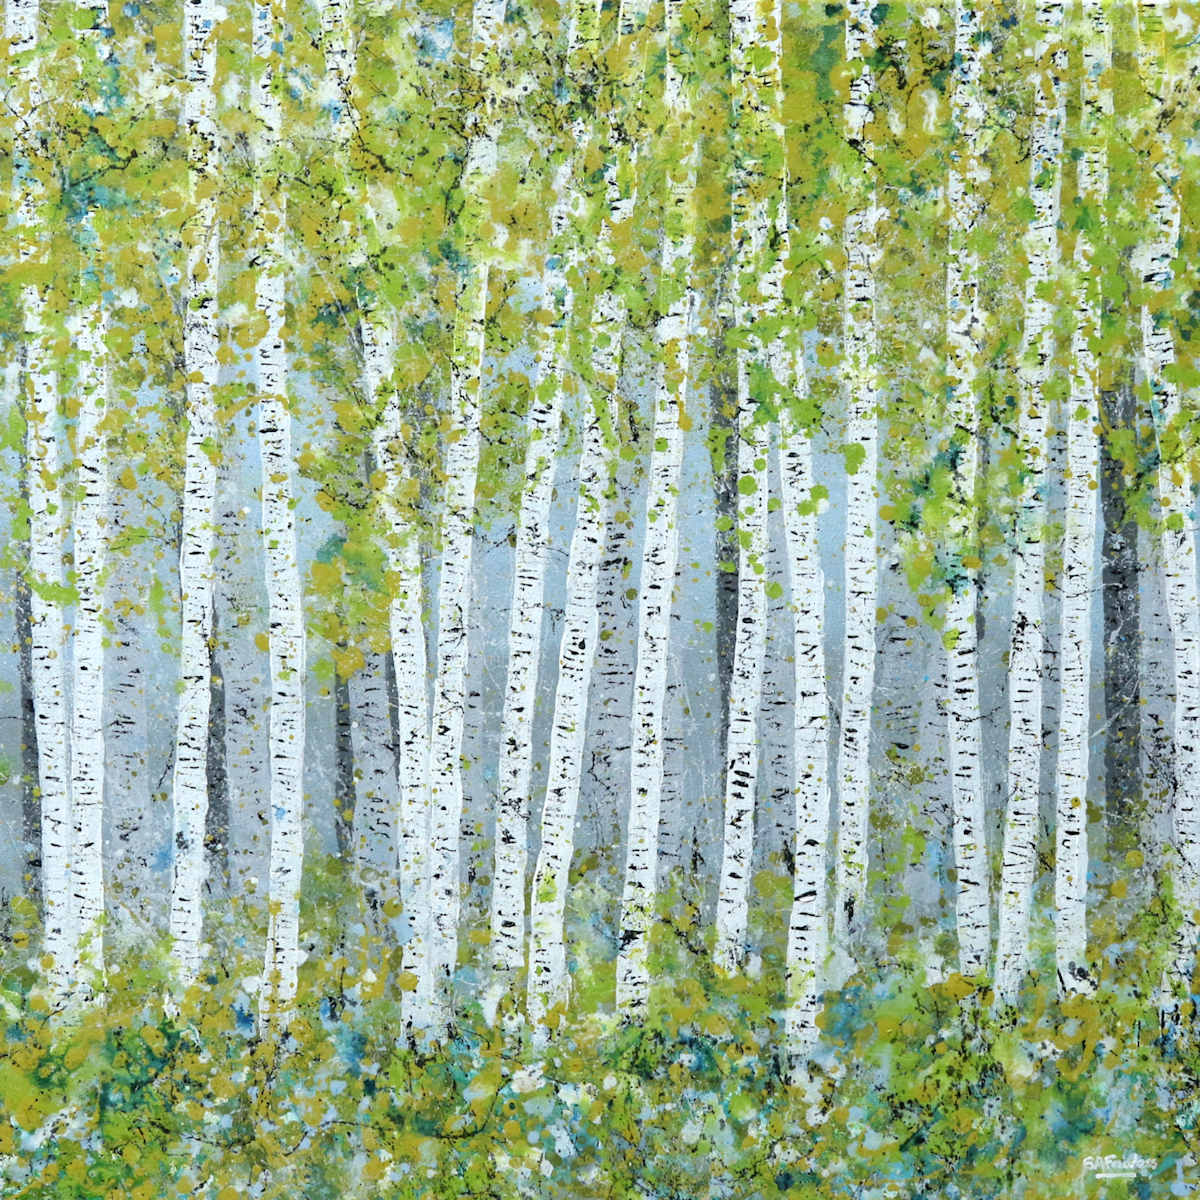 Silver birch trees in Spring